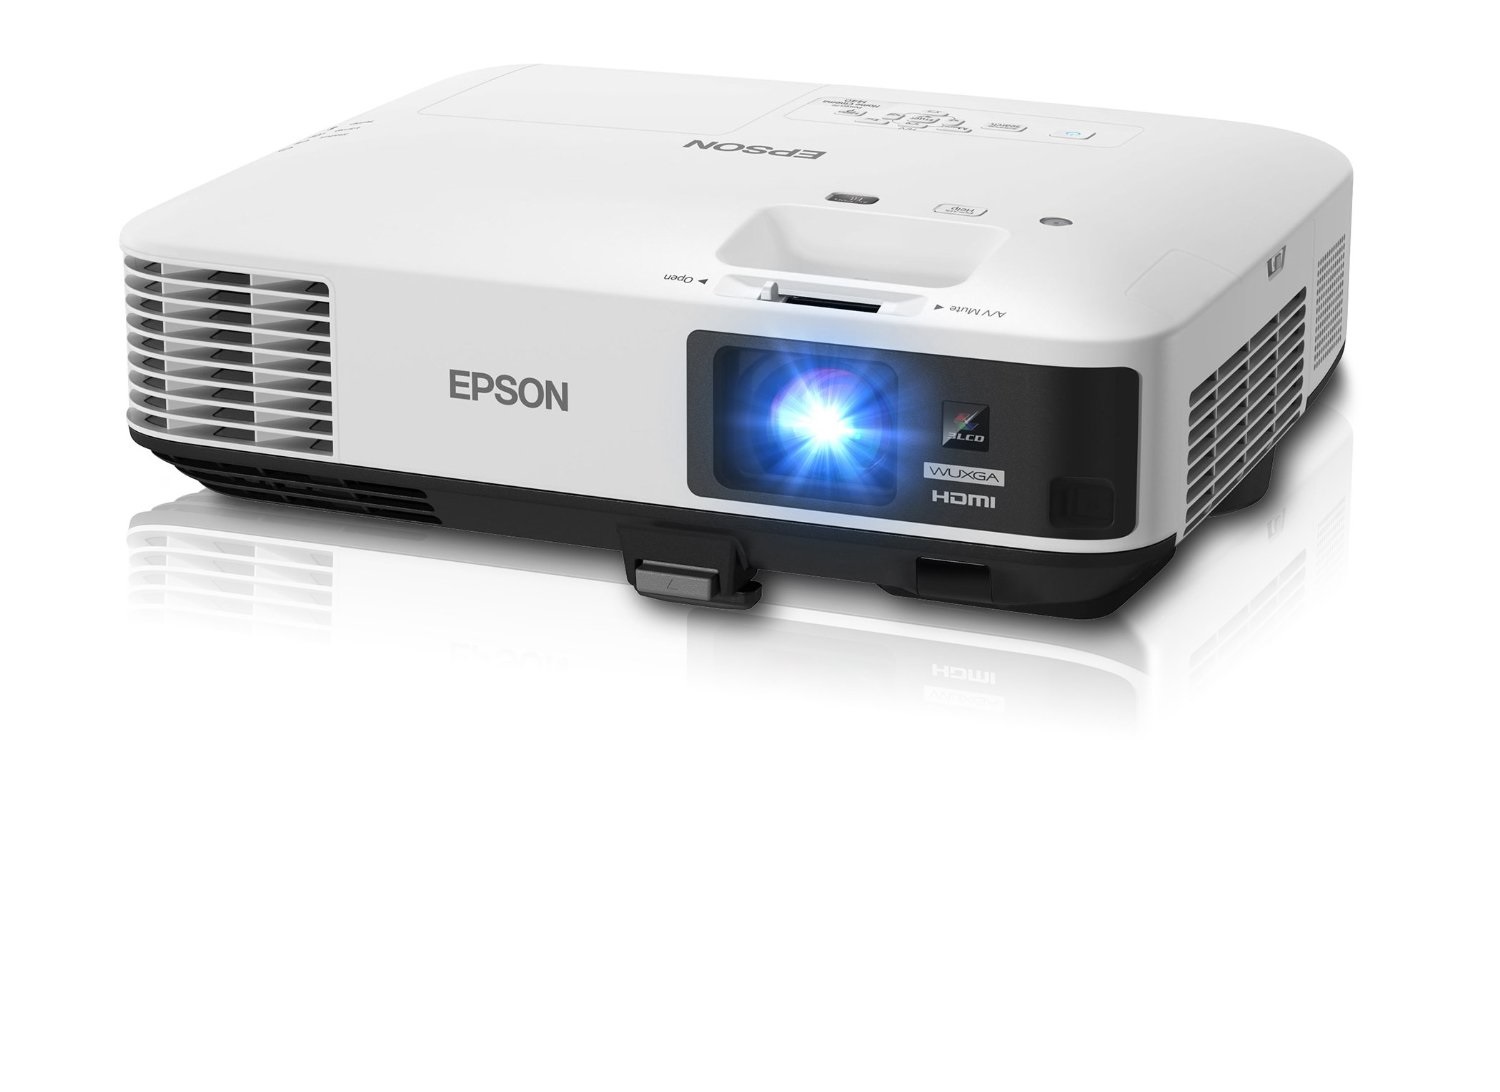 Epson-1440-Projector2